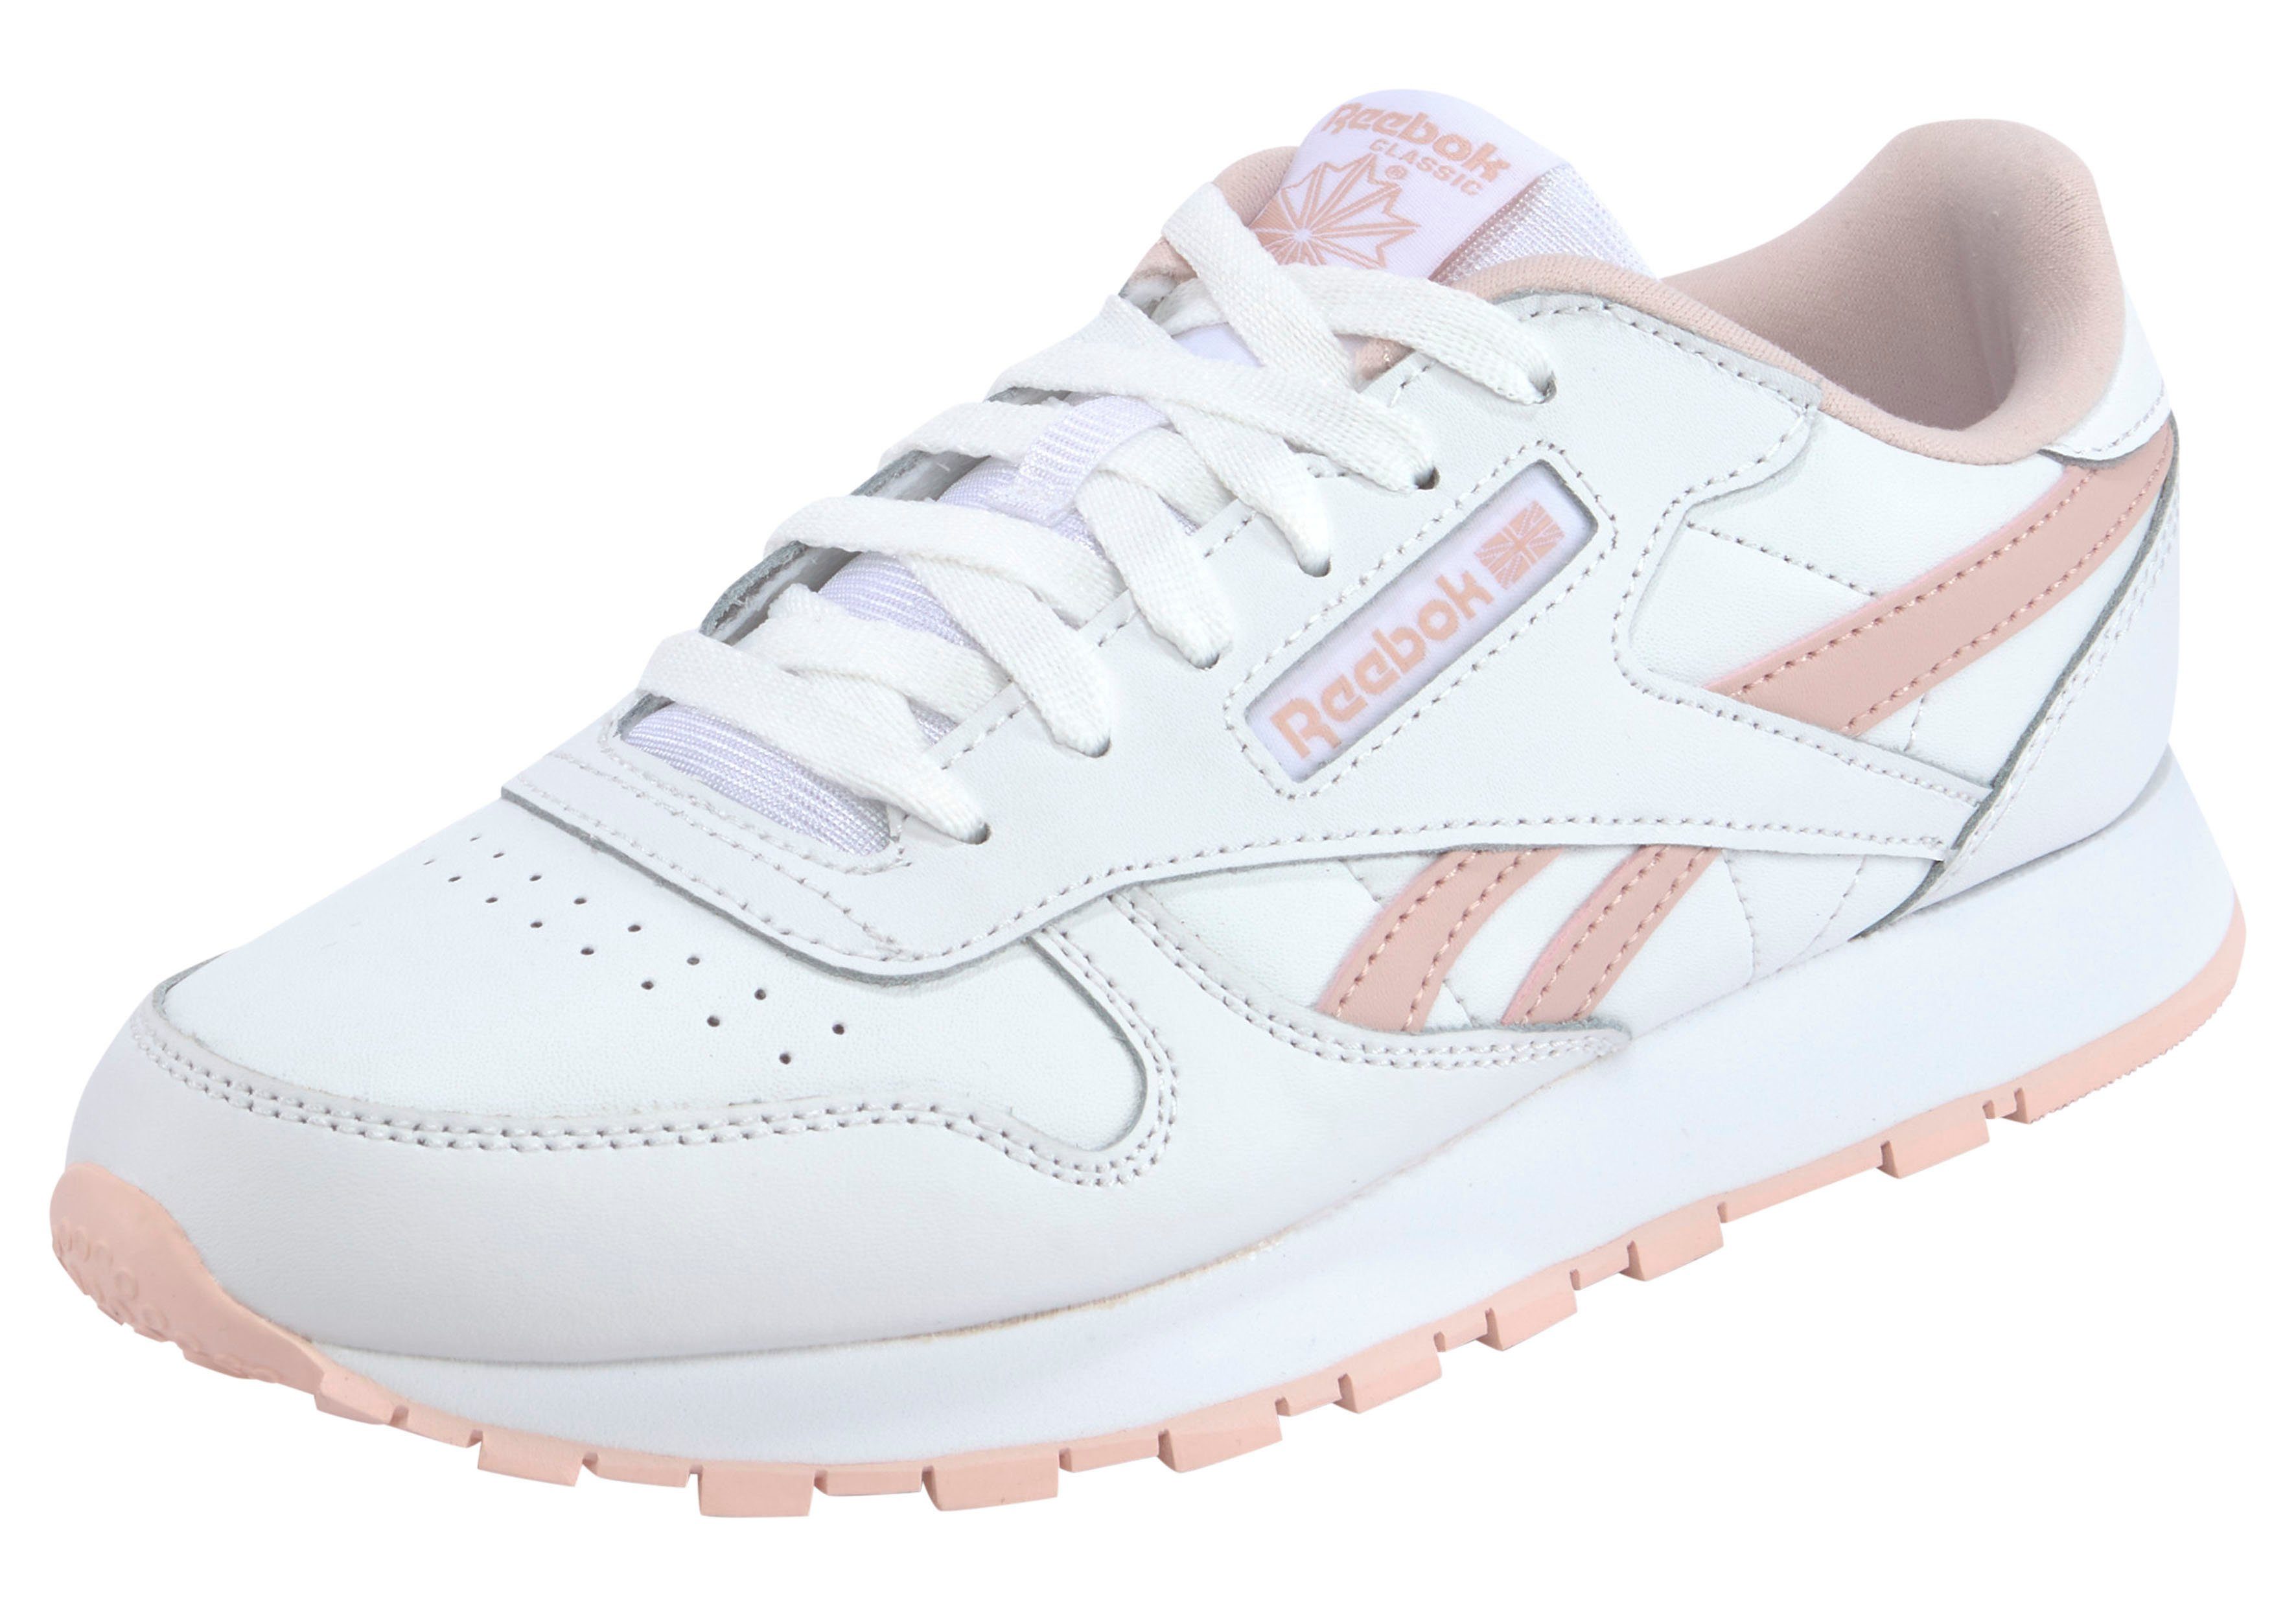 Neueste Ware eingetroffen Sneaker Classic CLASSIC weiß-apricot LEATHER Reebok